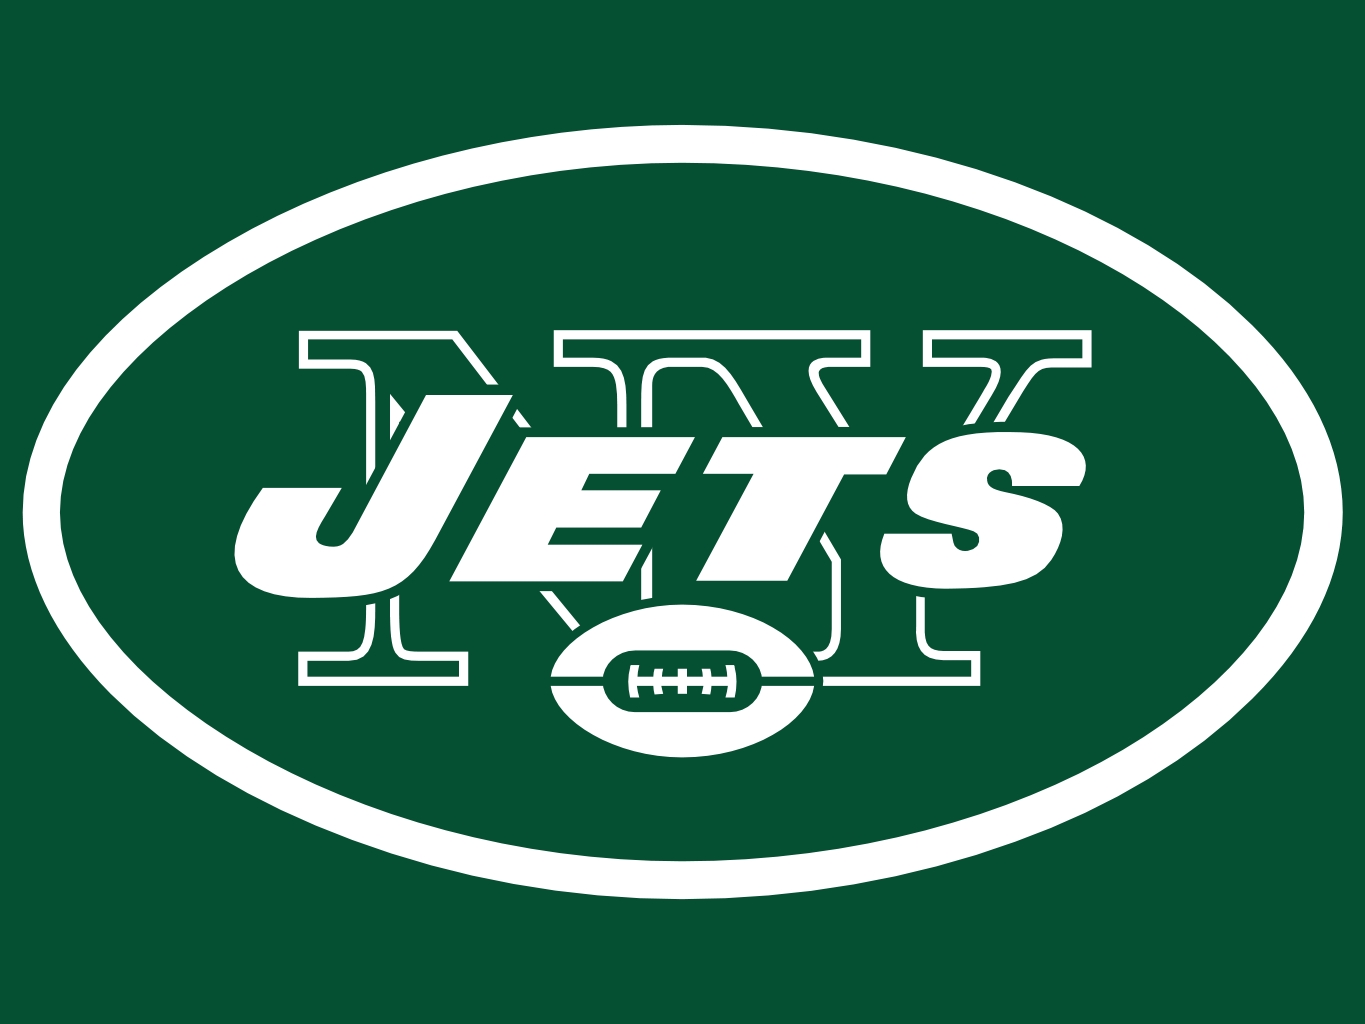 2019 New York Jets Predictions & NFL Football Gambling Odds